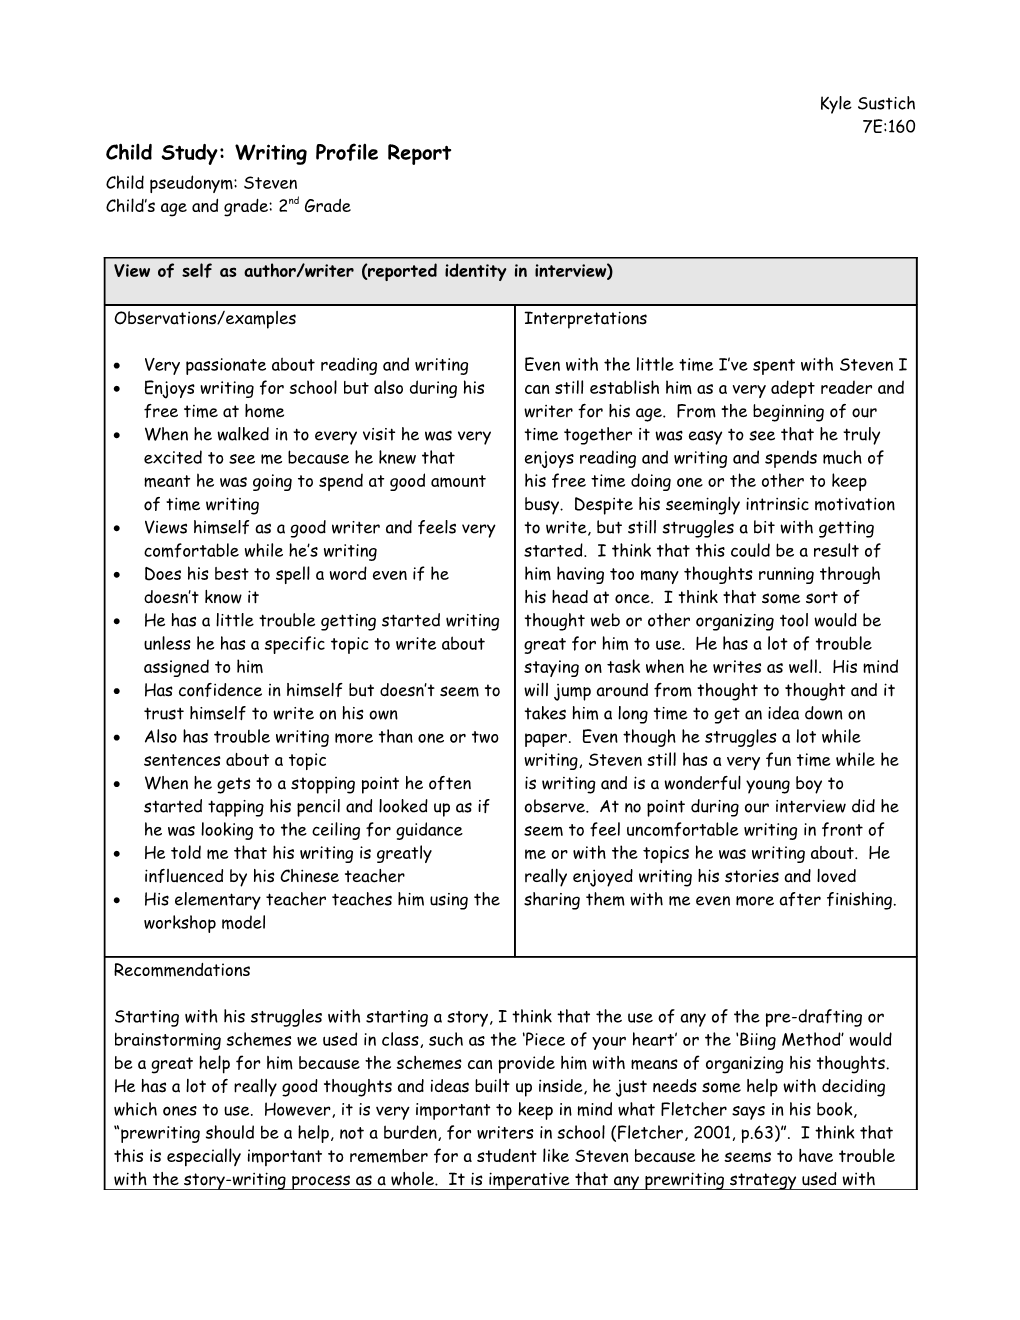 Child Study: Writing Profile Report